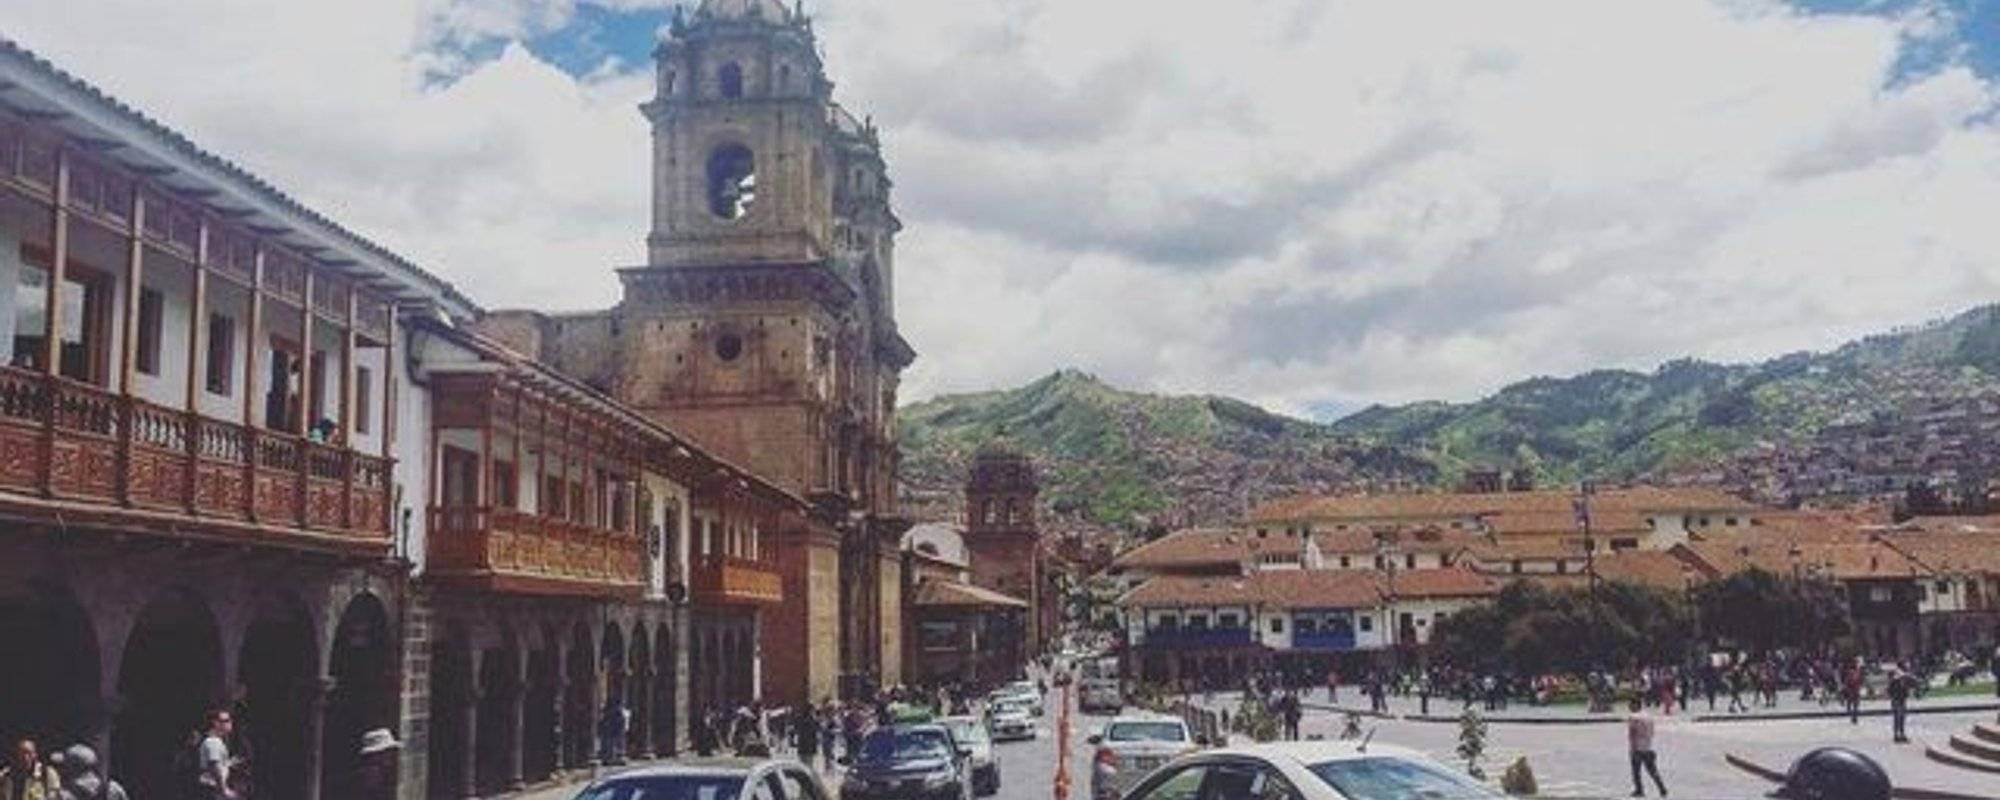 Red-Brick city - ancient capital of Peru - Cusco